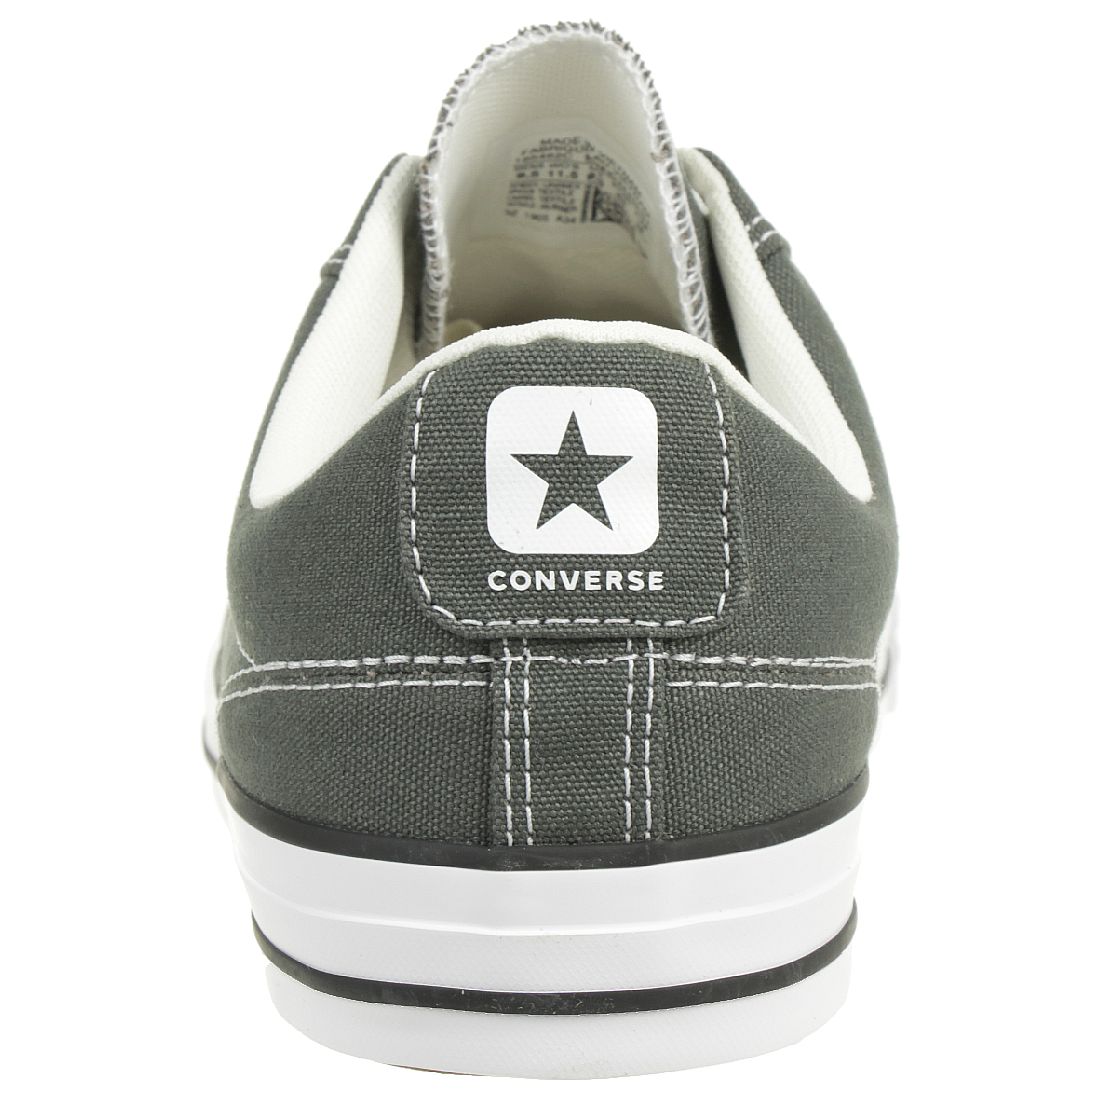 Converse STAR PLAYER OX Schuhe Sneaker Canvas grau 165462C